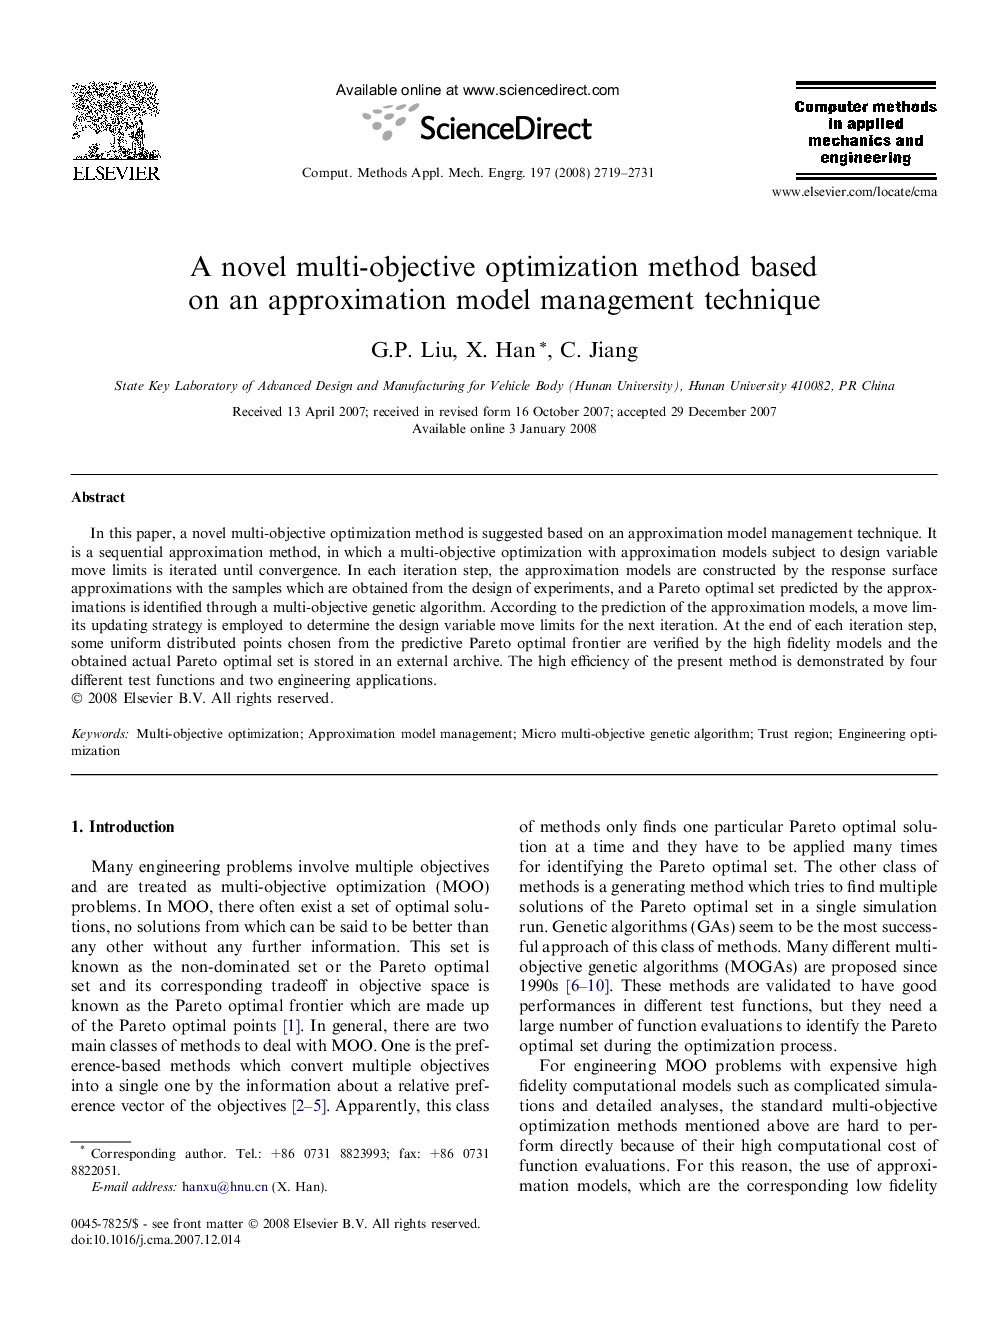 A novel multi-objective optimization method based on an approximation model management technique